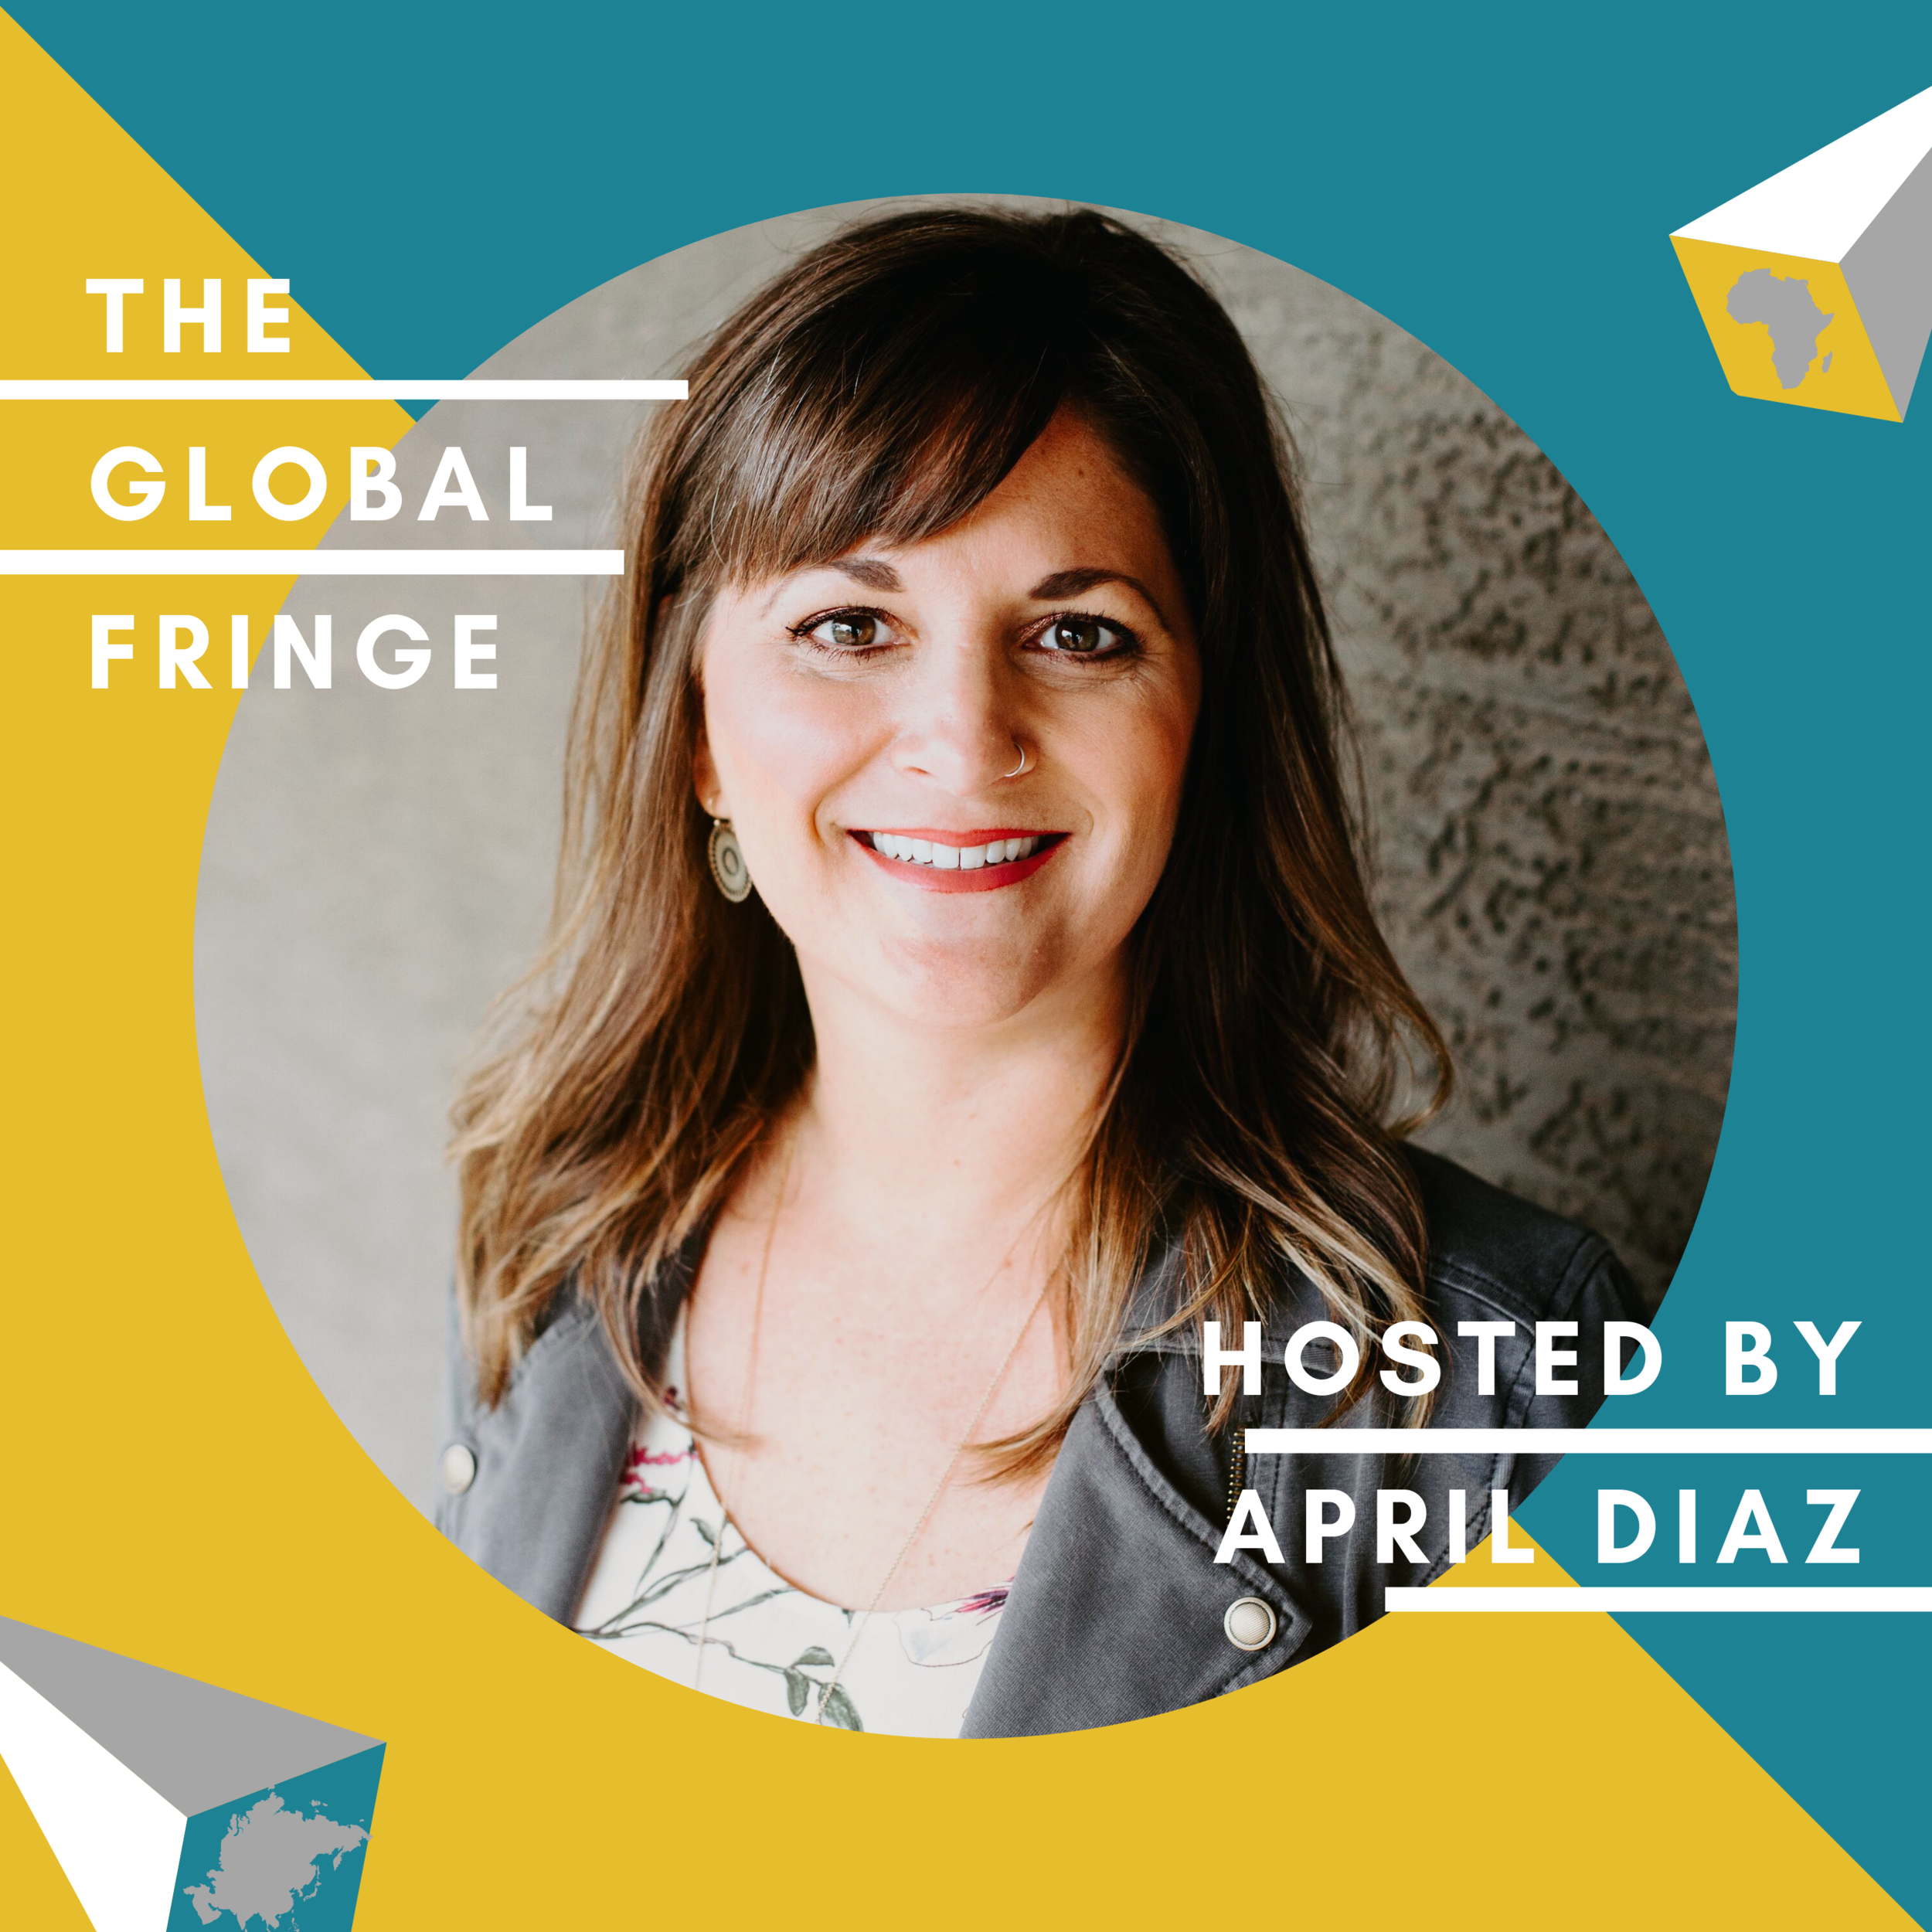 The Global Fringe